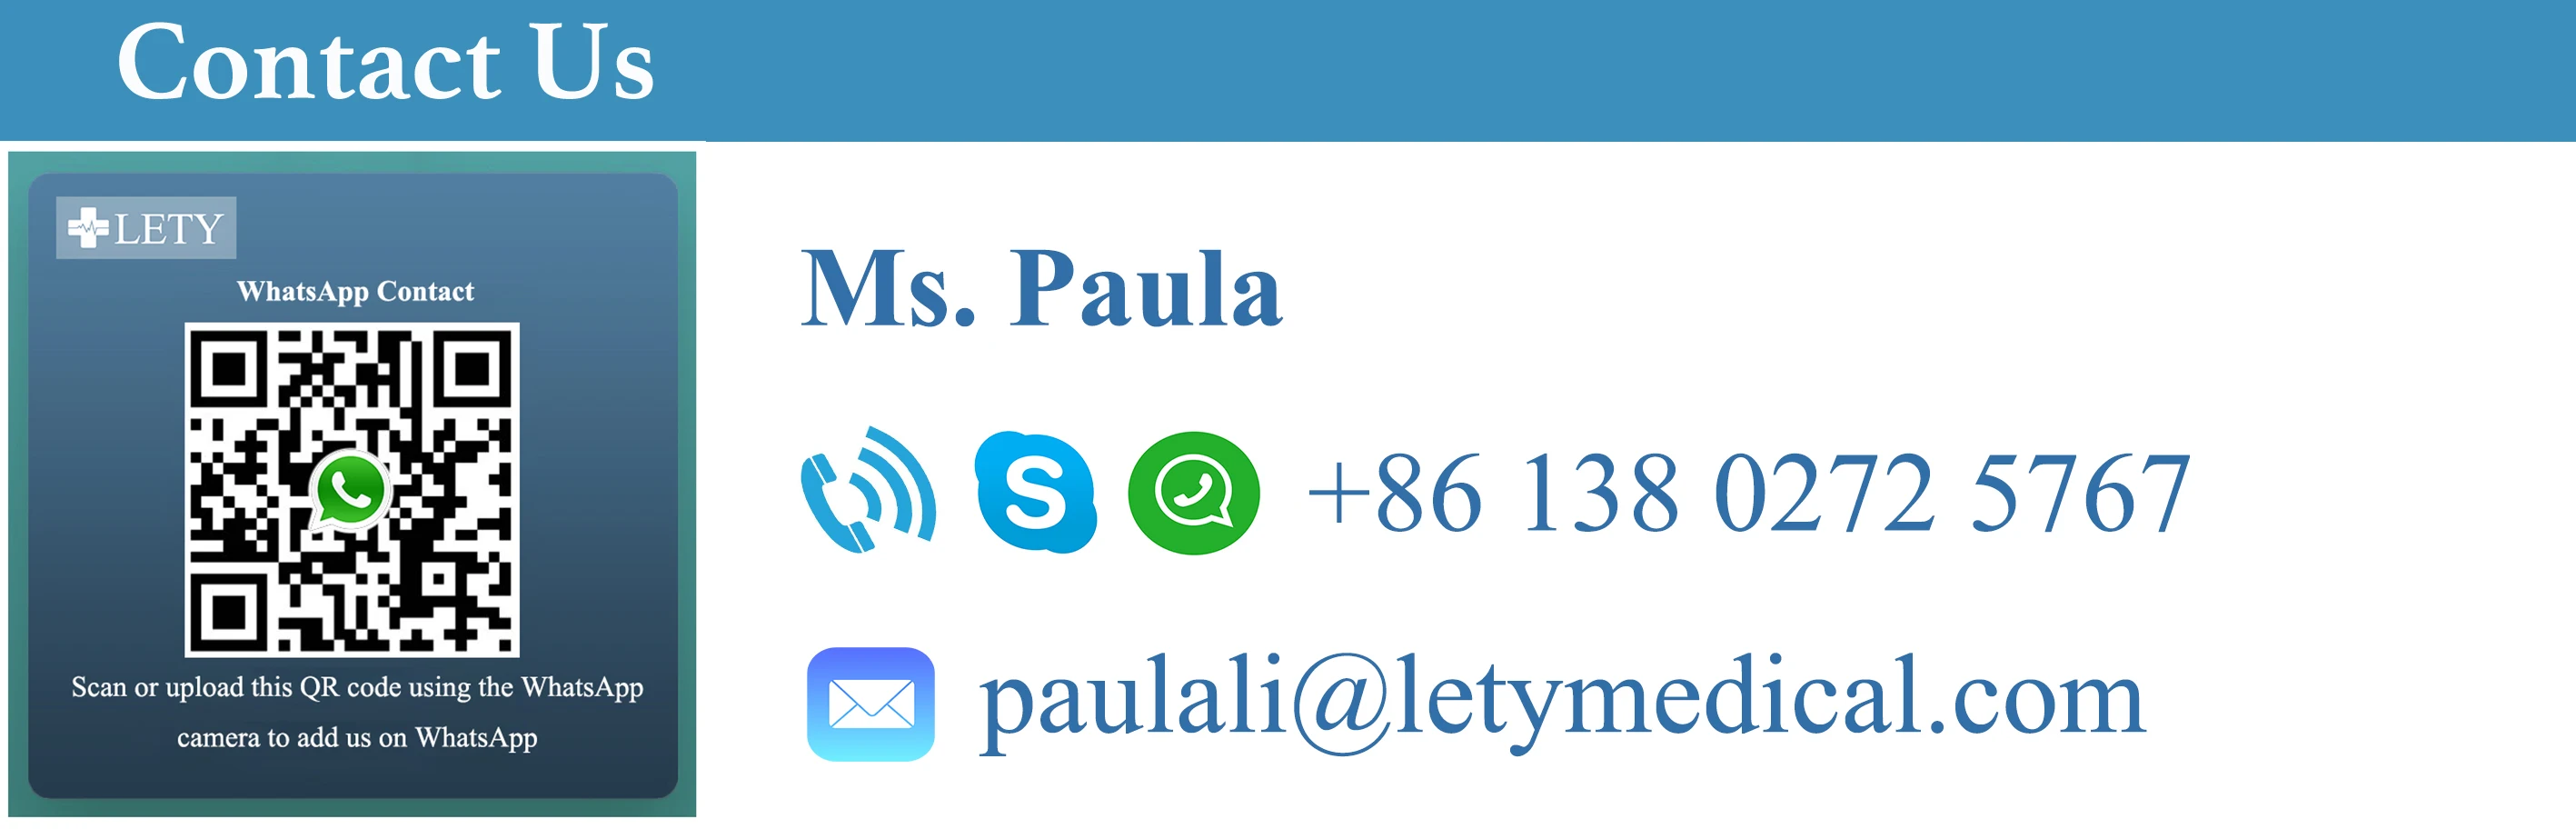 paula's new contact.jpg